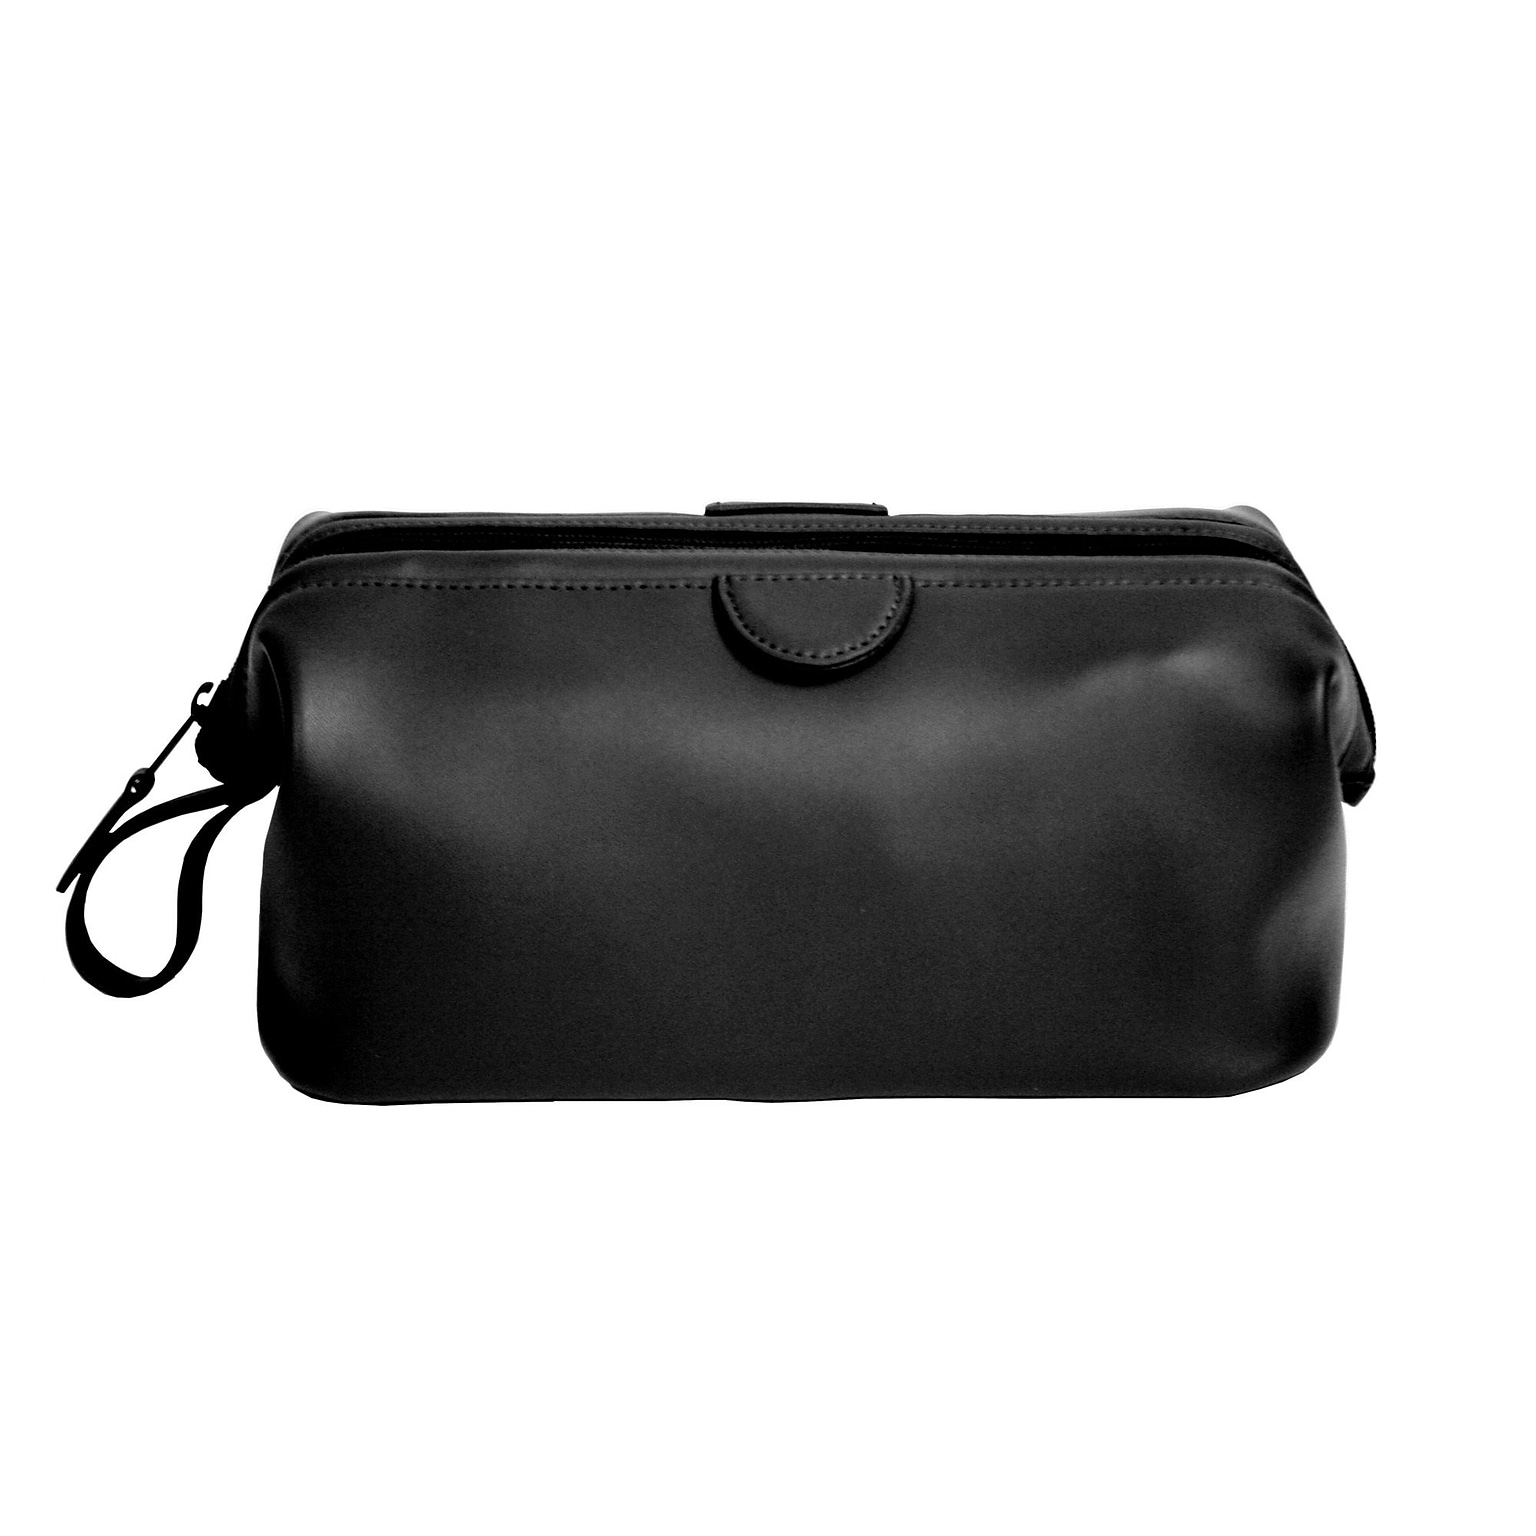 Royce Leather Classic Toiletry Bag, Black (265-BLACK-6)